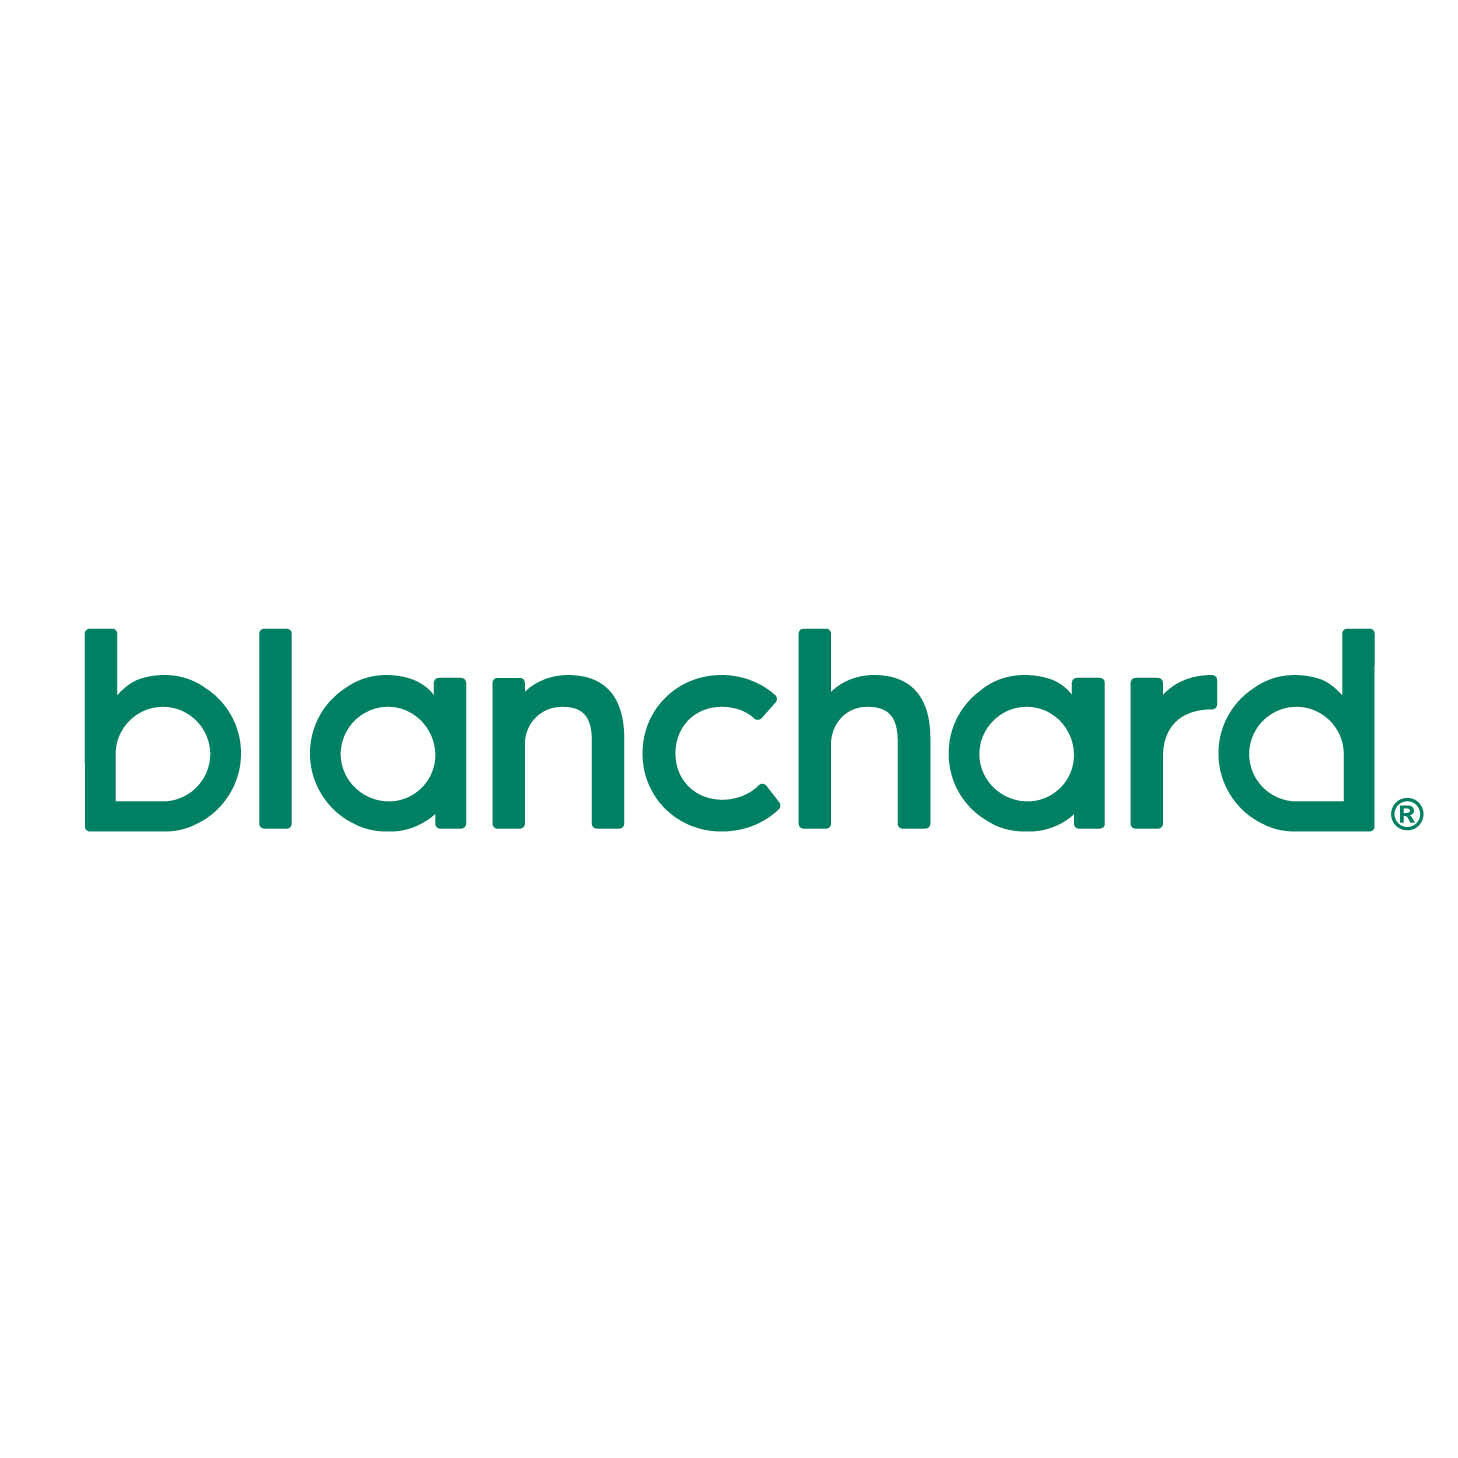 Blanchard logo (PRNewsfoto/The Ken Blanchard Companies)